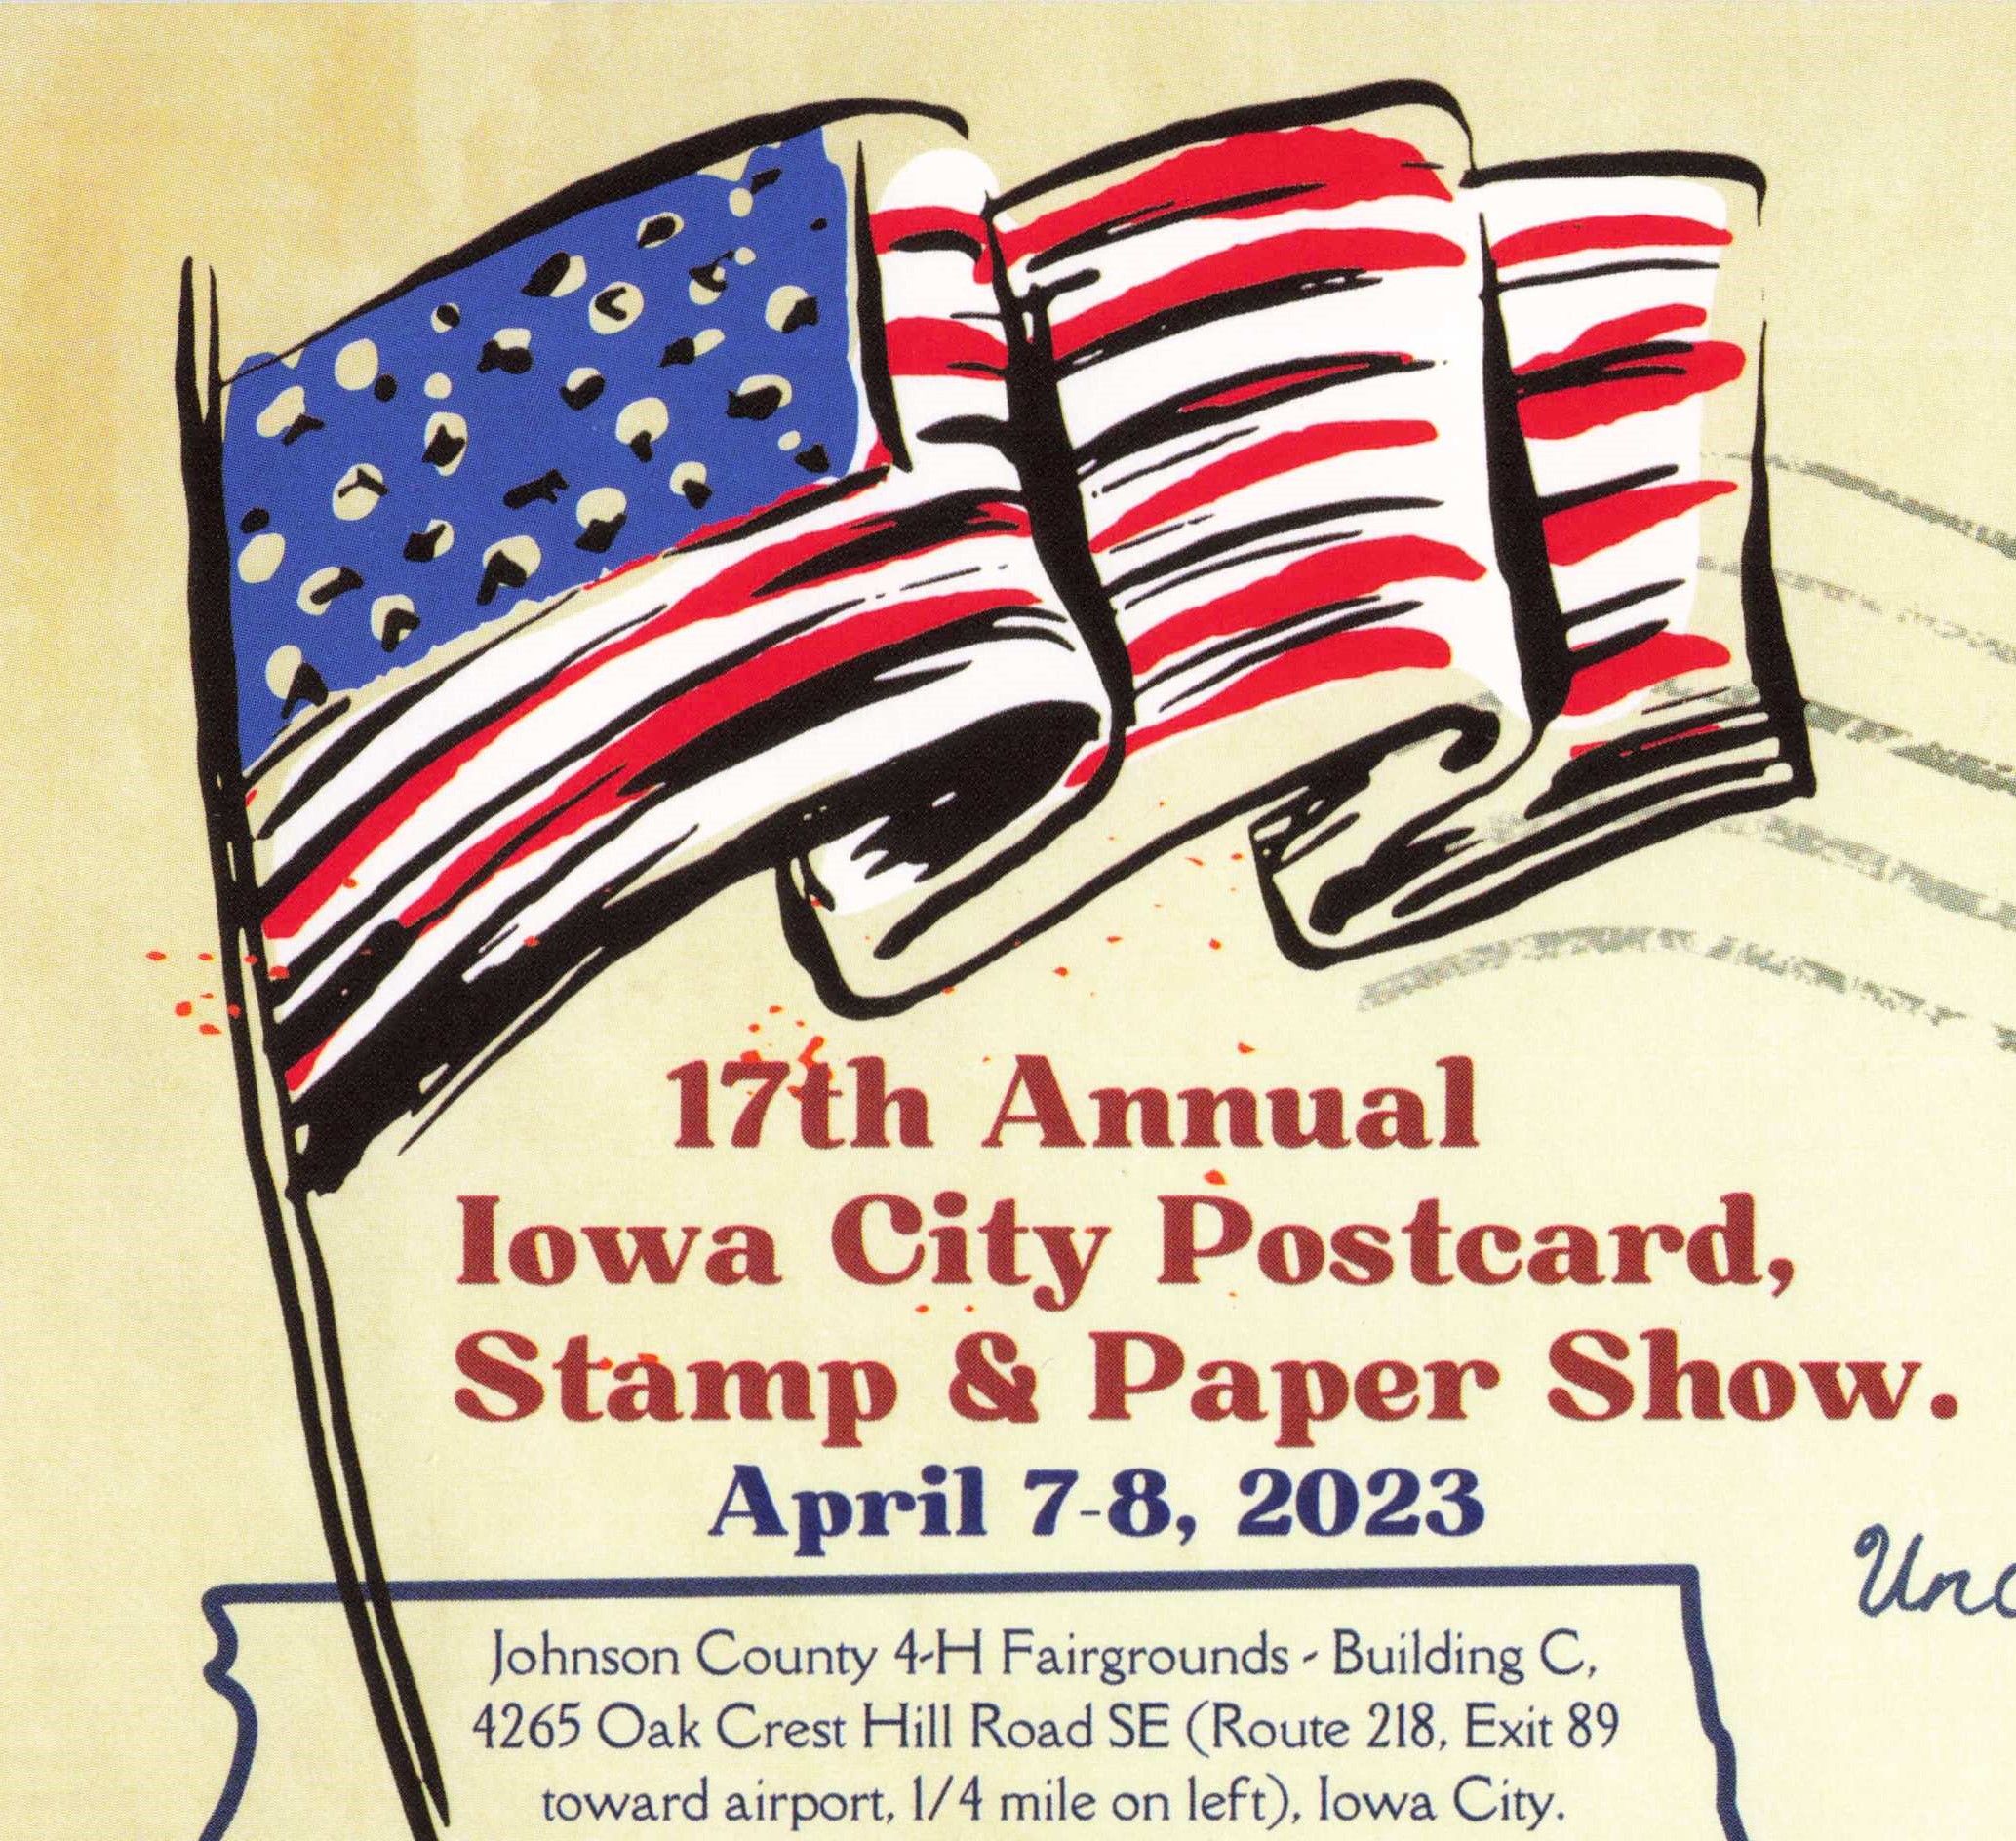 17th Annual Iowa City Postcard, Stamp & Paper Show